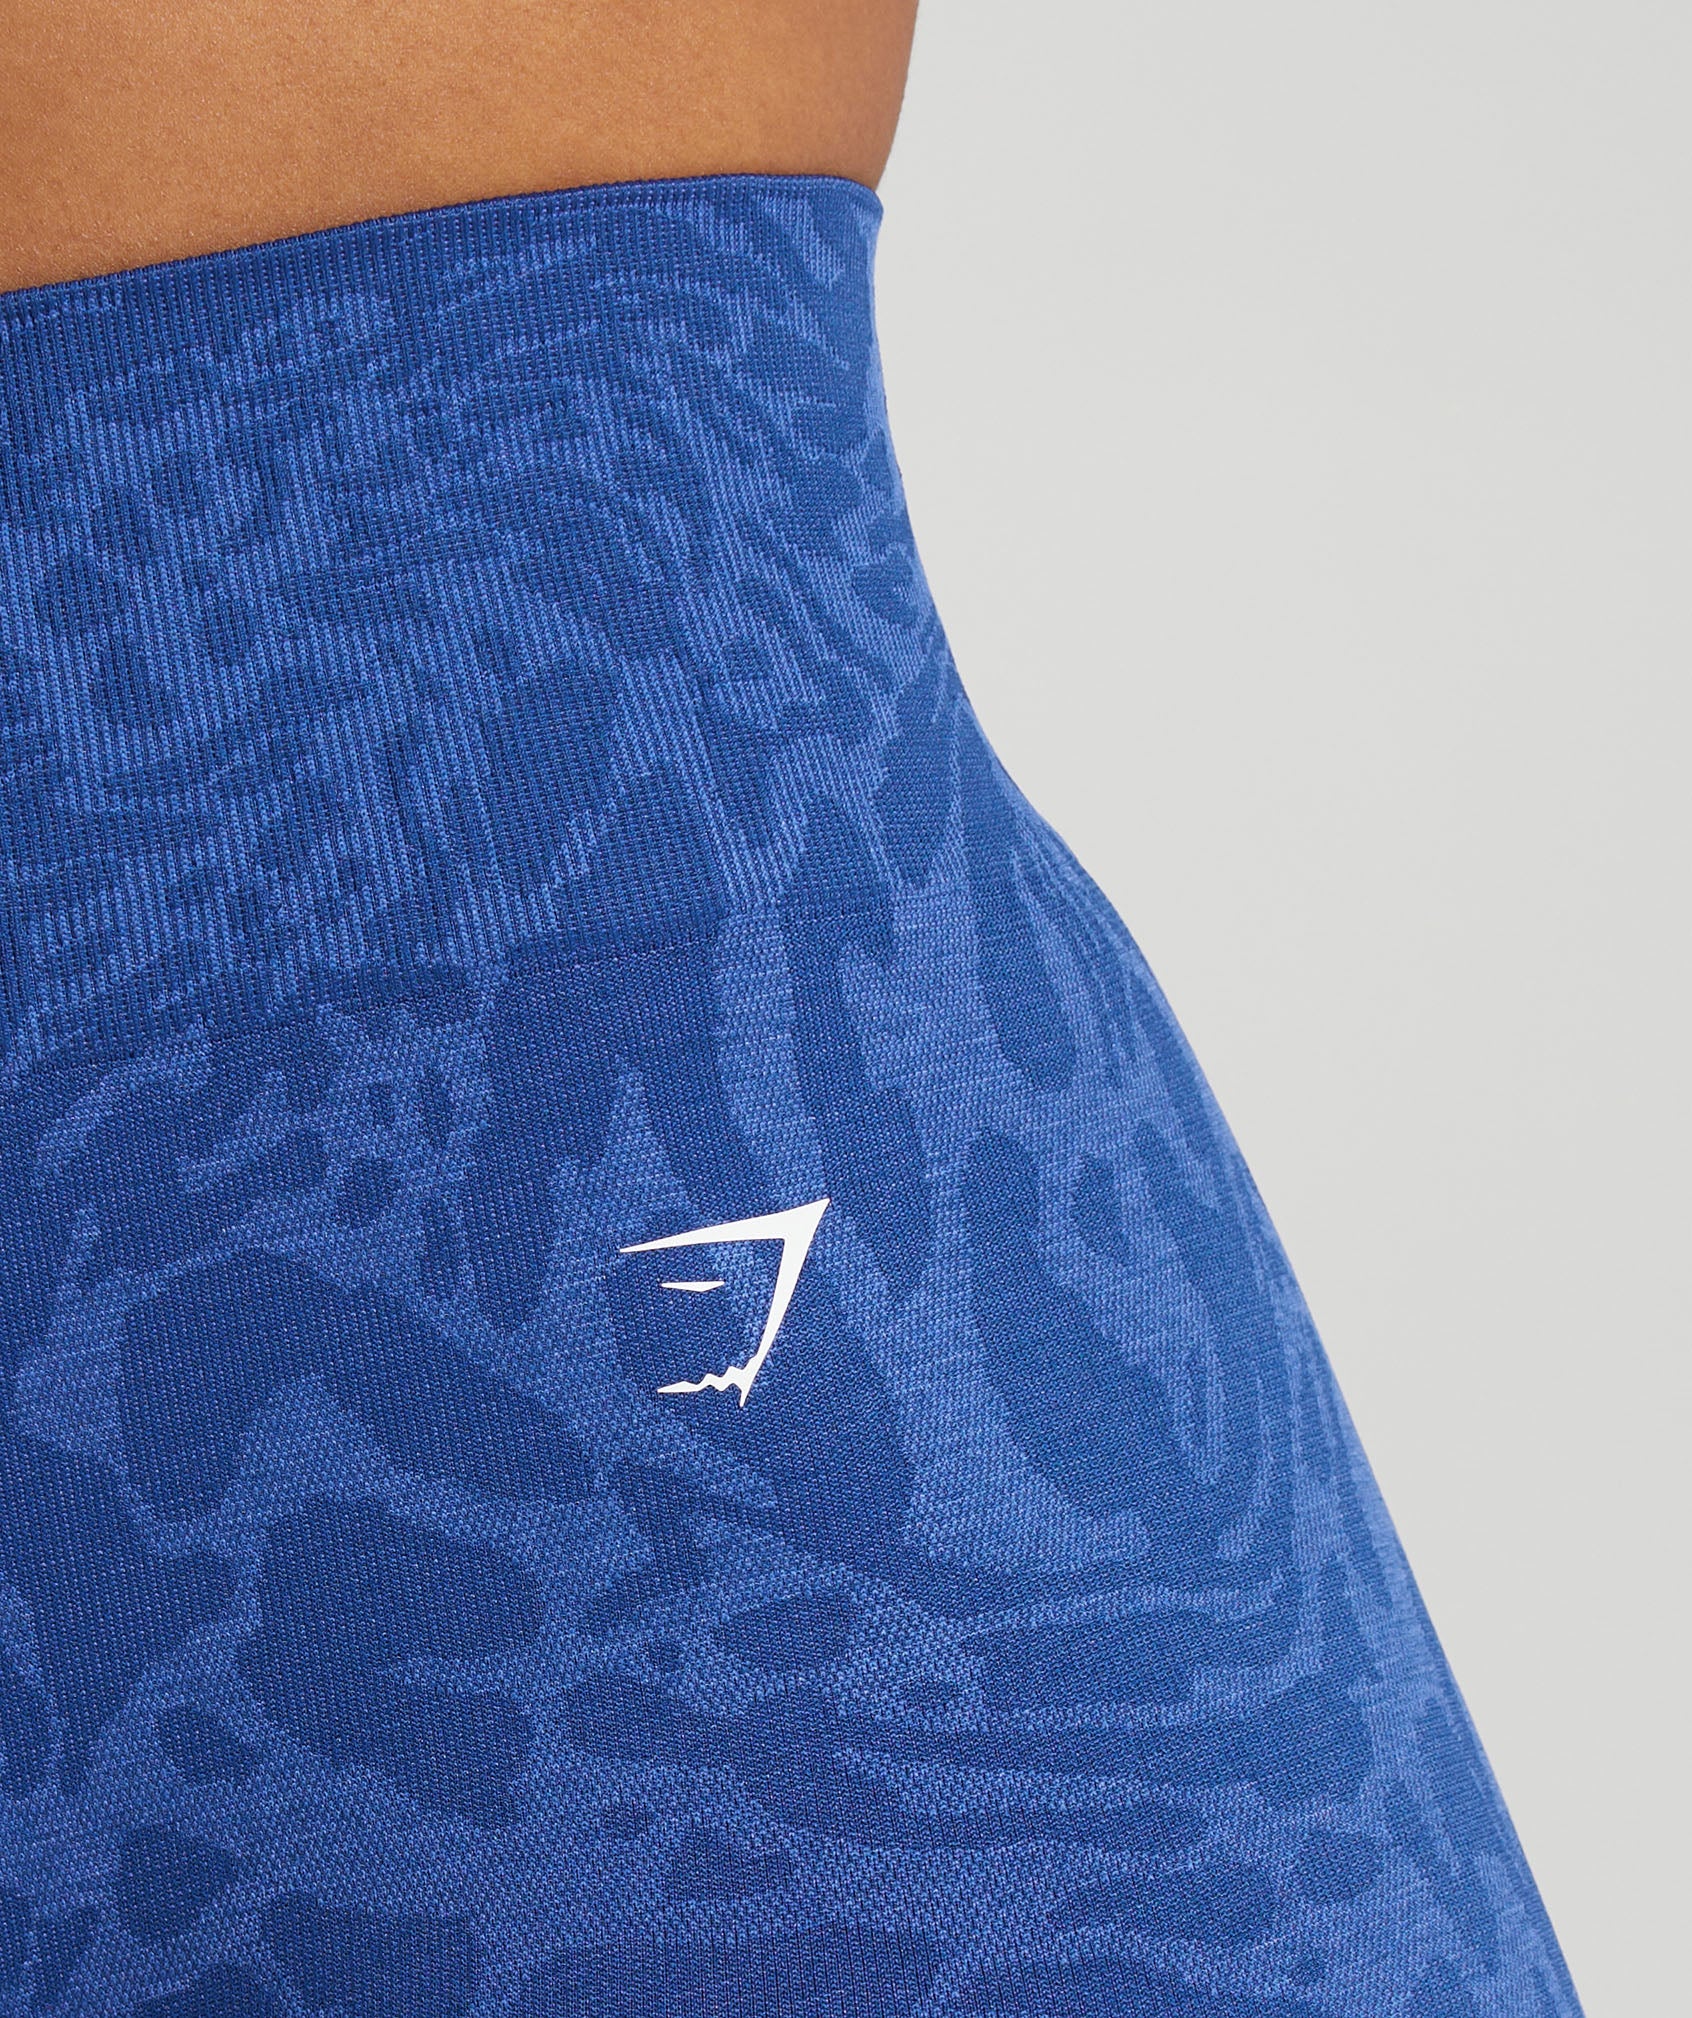 Adapt Safari Tight Shorts in Wave Blue/Iris Blue - view 5